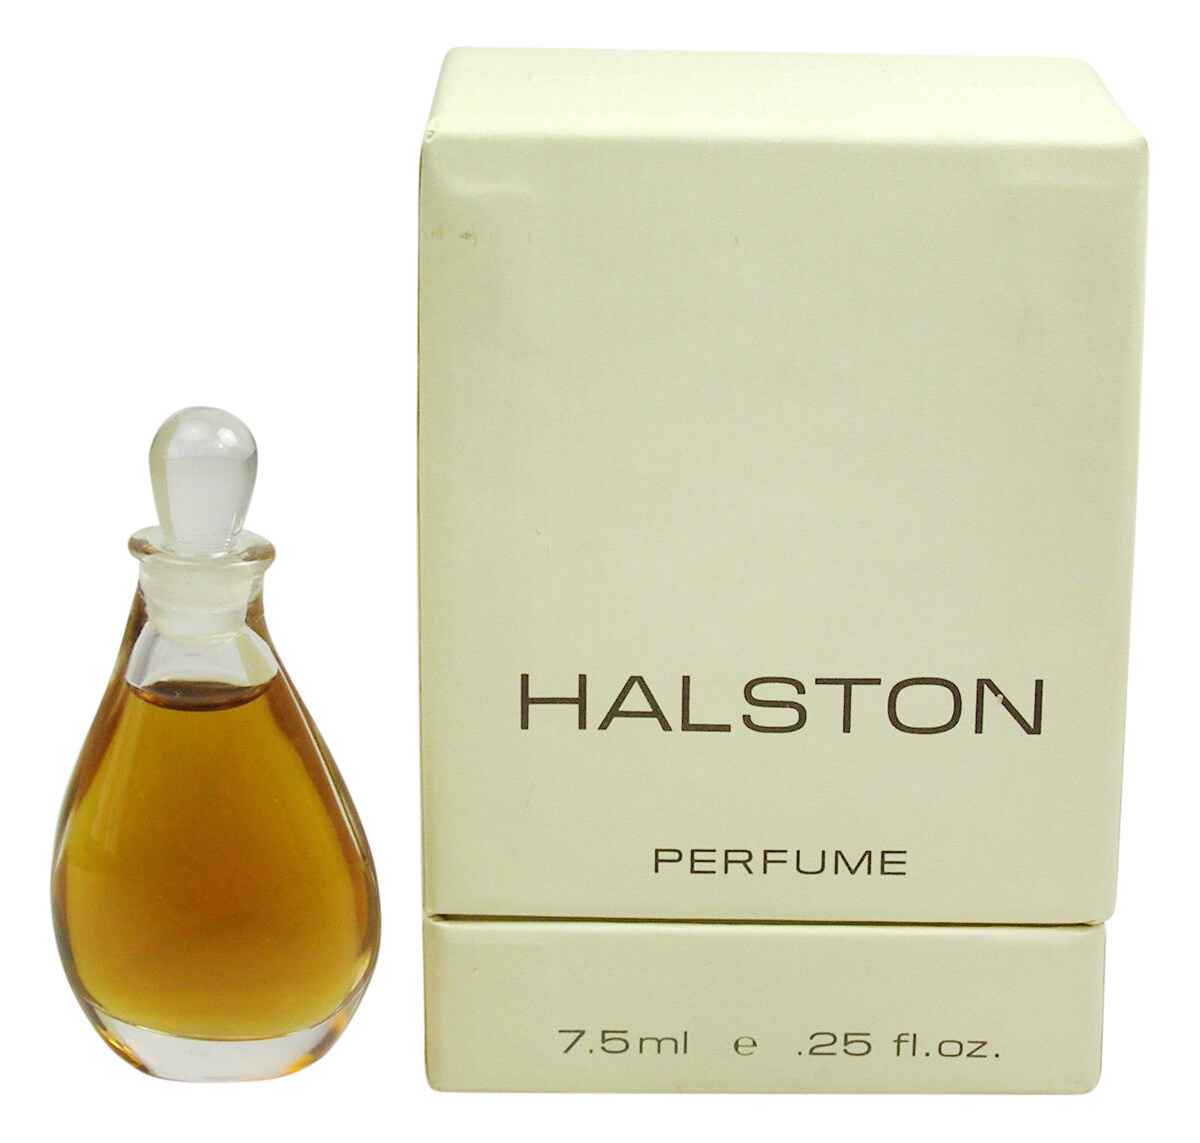 Halston Perfume Perfume Reviews Perfume Facts